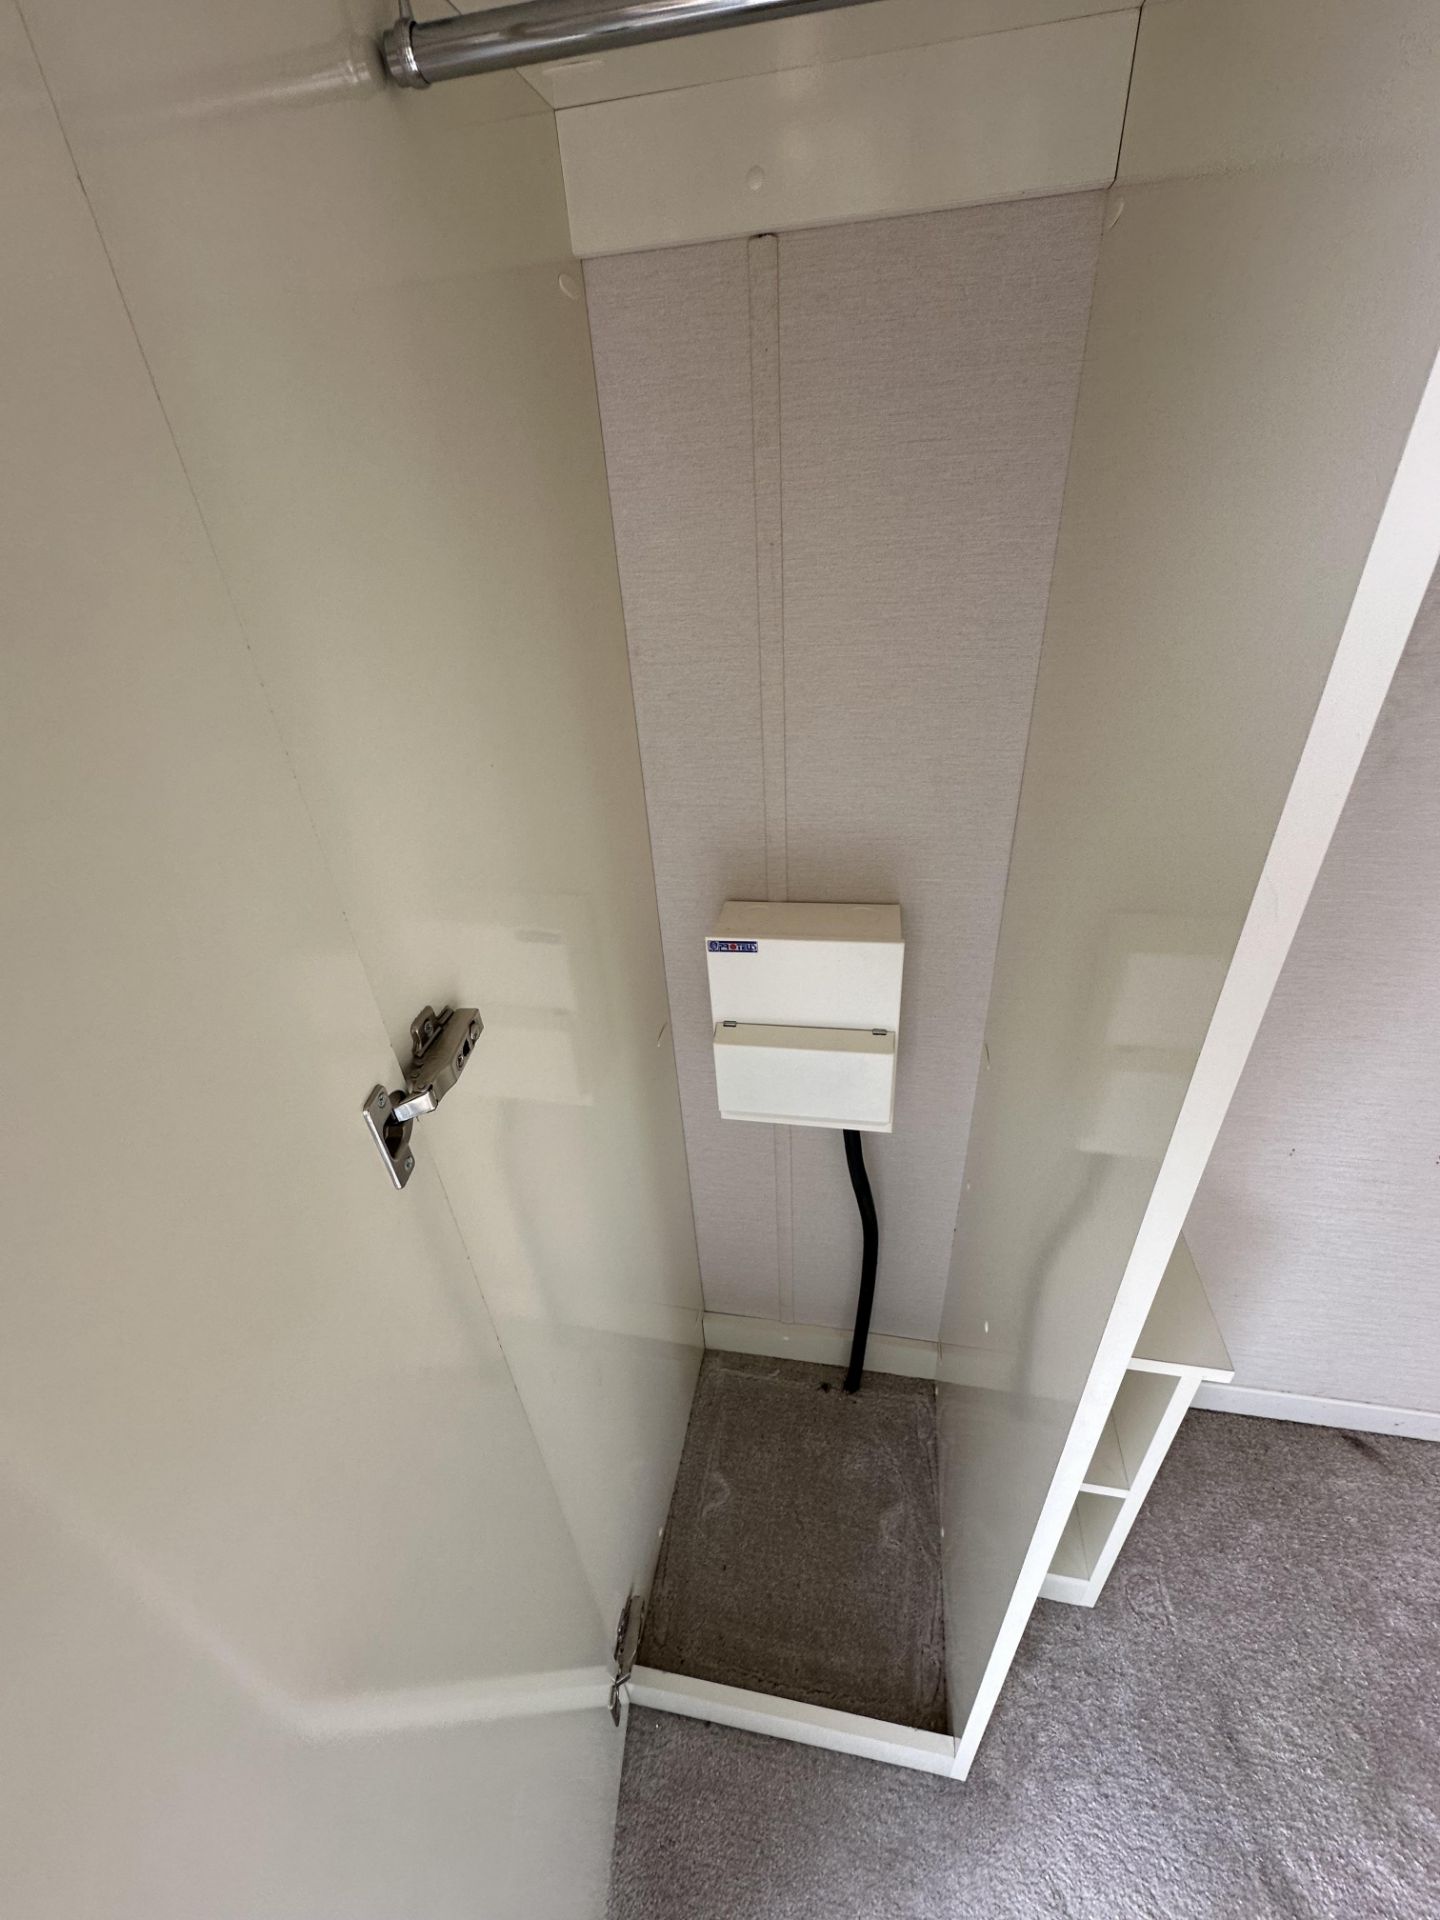 European Mobile Home '2022 Model' 36x14 Ruby Edition - 2 Bedroom - Bathroom - Image 41 of 46